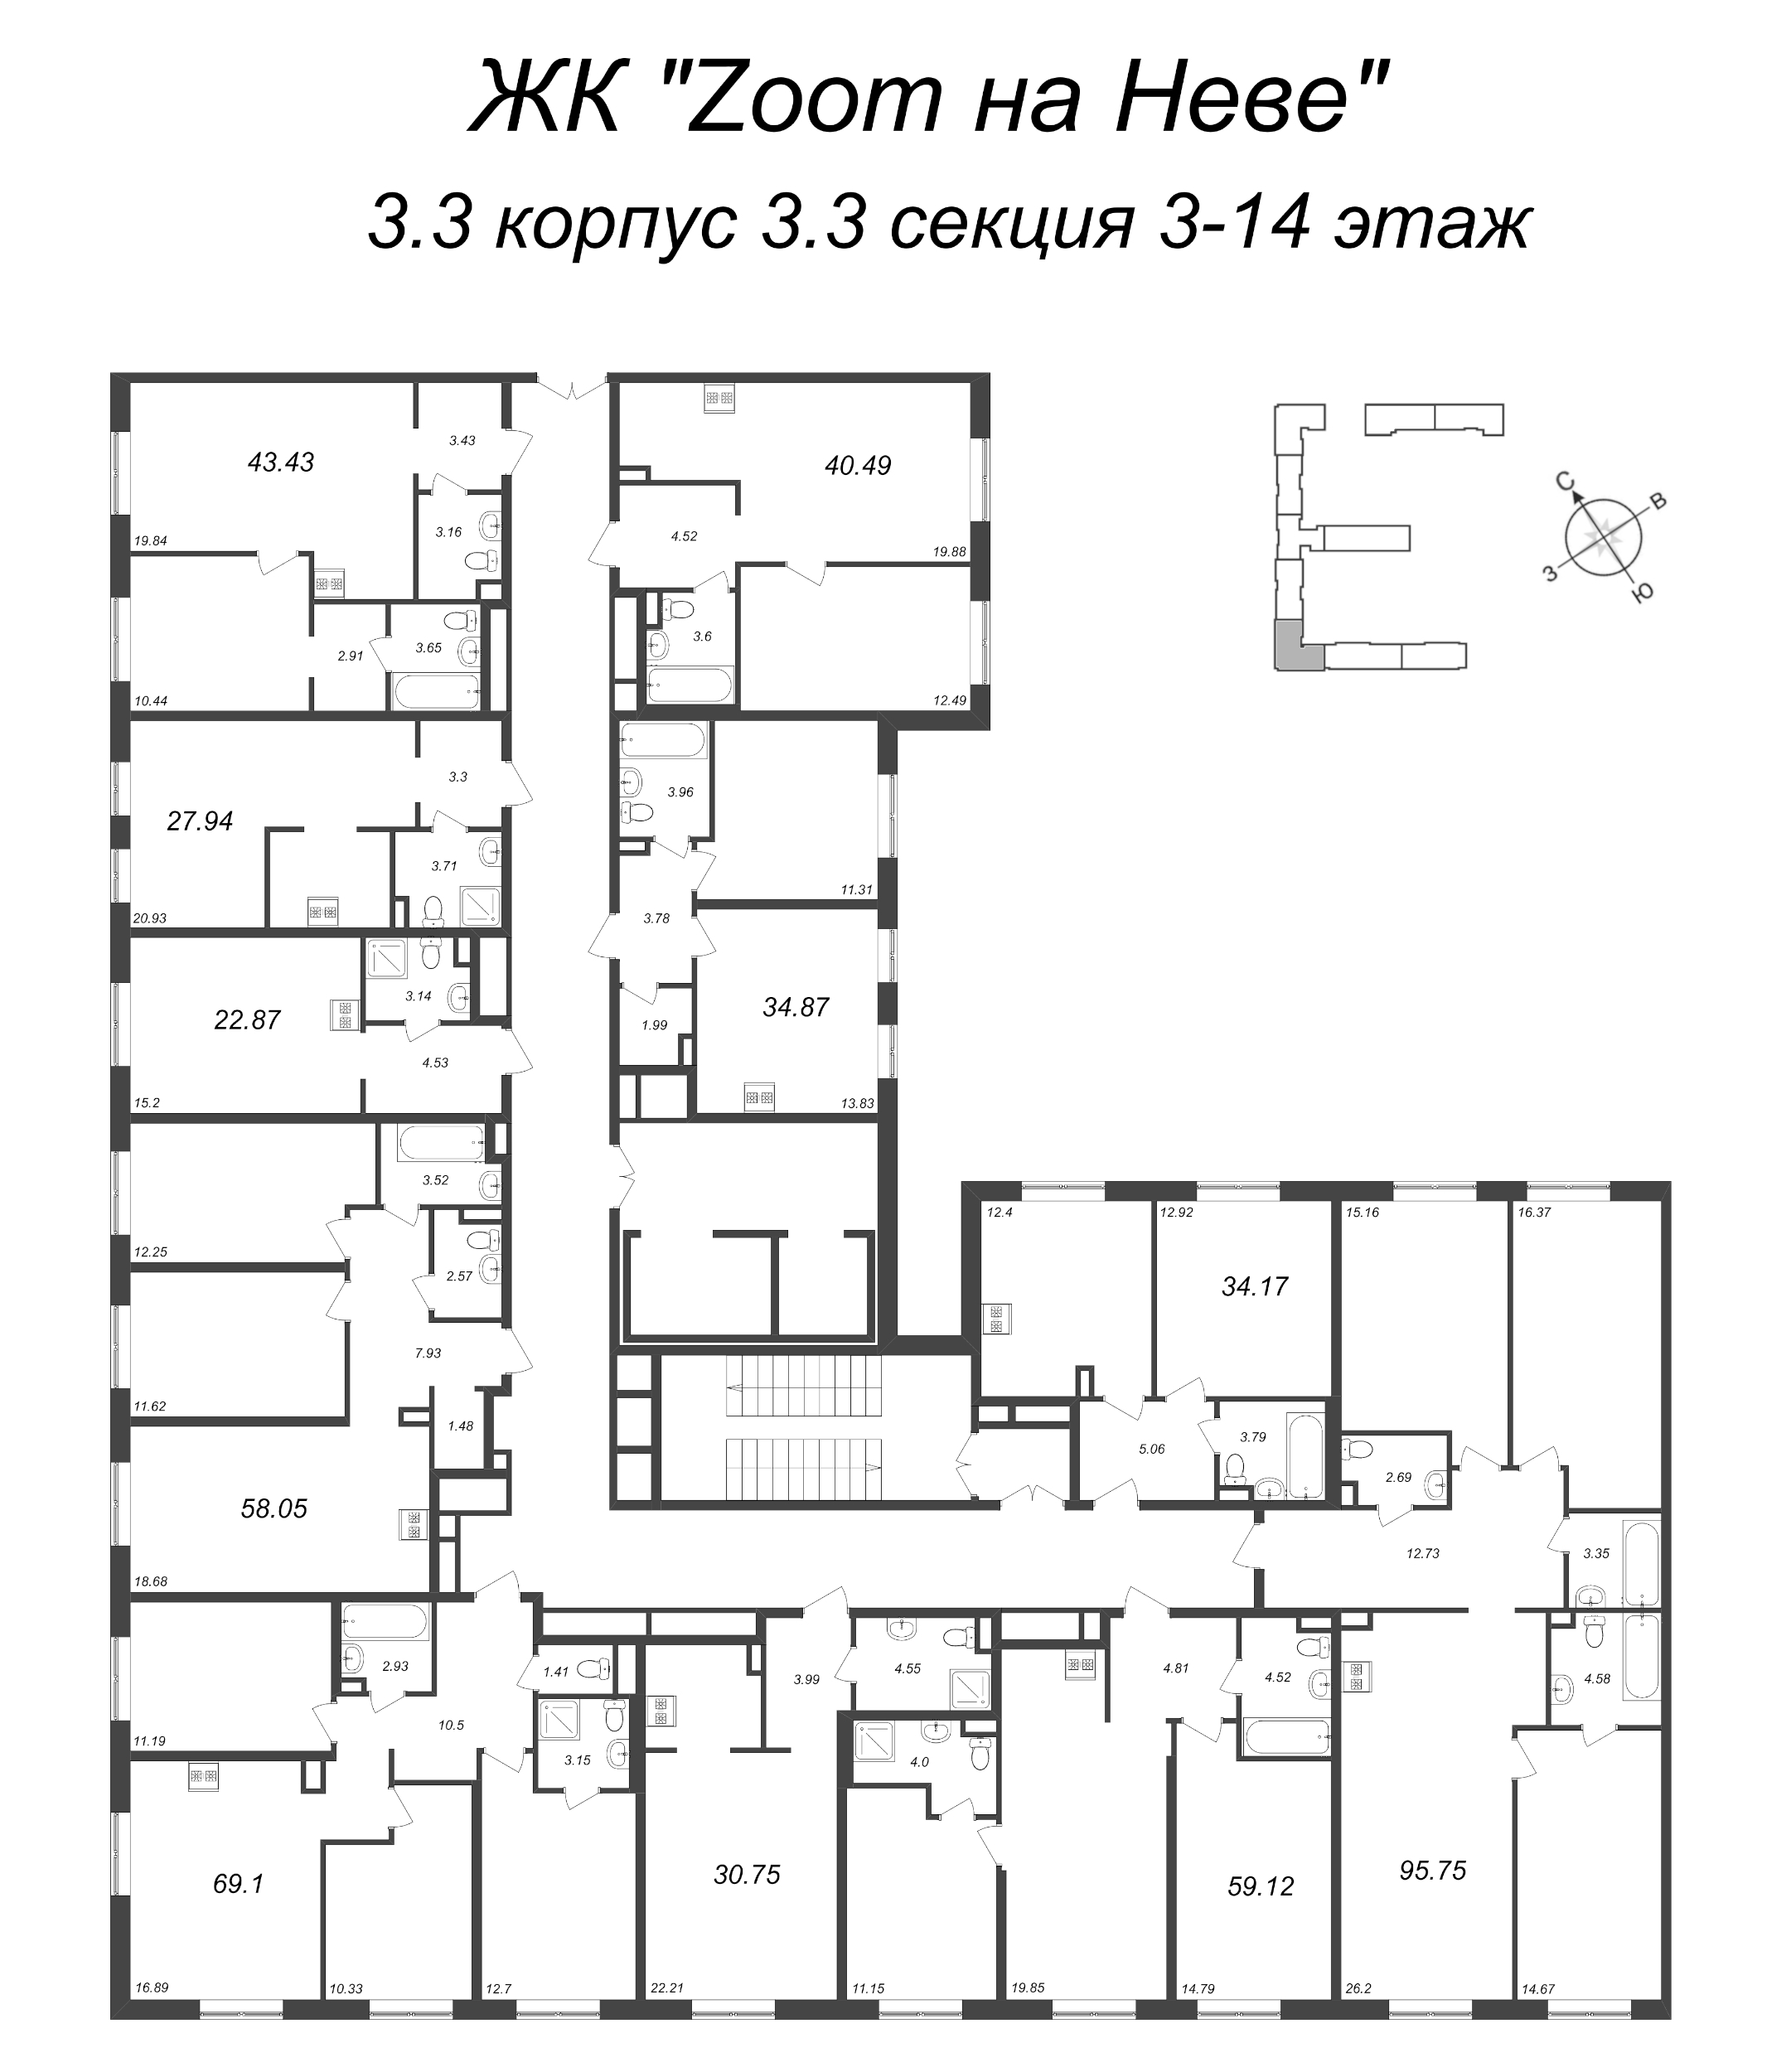 4-комнатная (Евро) квартира, 68.74 м² - планировка этажа